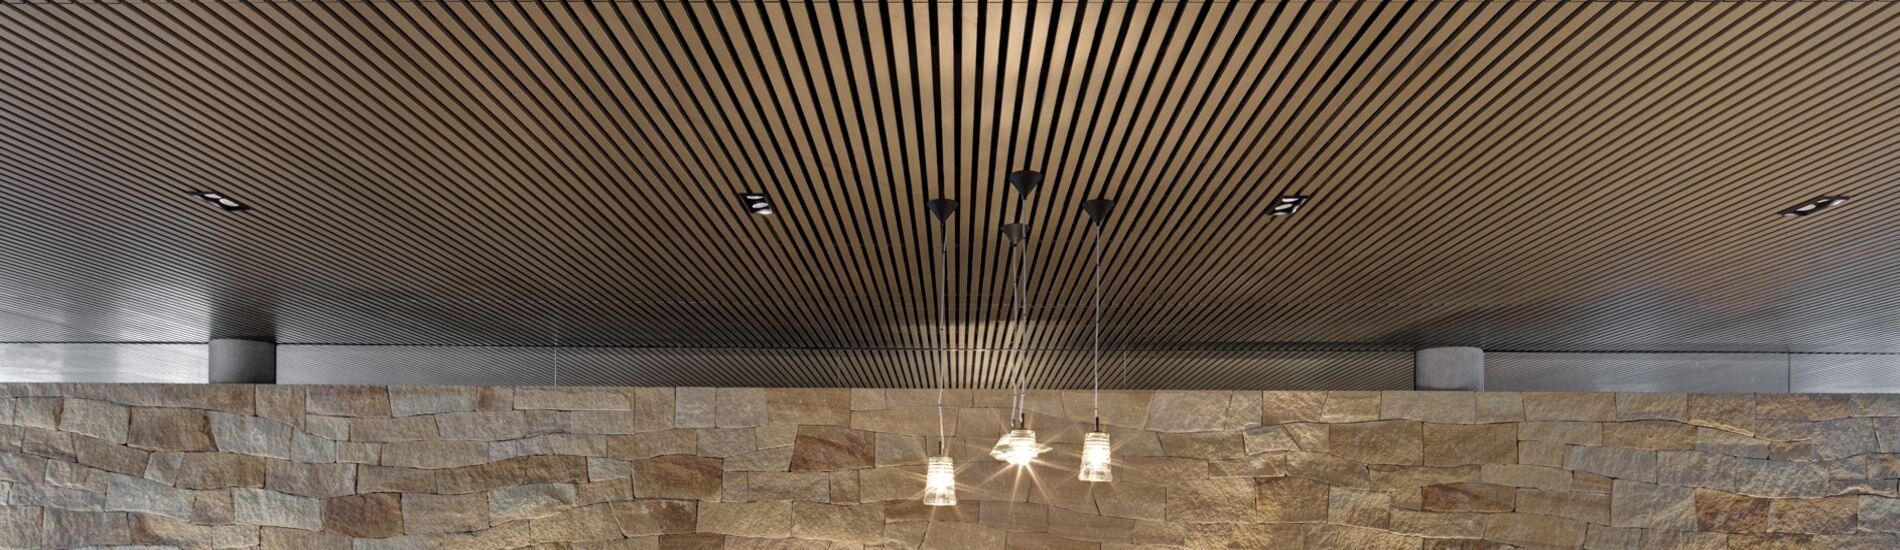 SUPASLAT Aluminium Ceiling Achieve Dramatic Contemporary Look in Hotel Reception Lounge